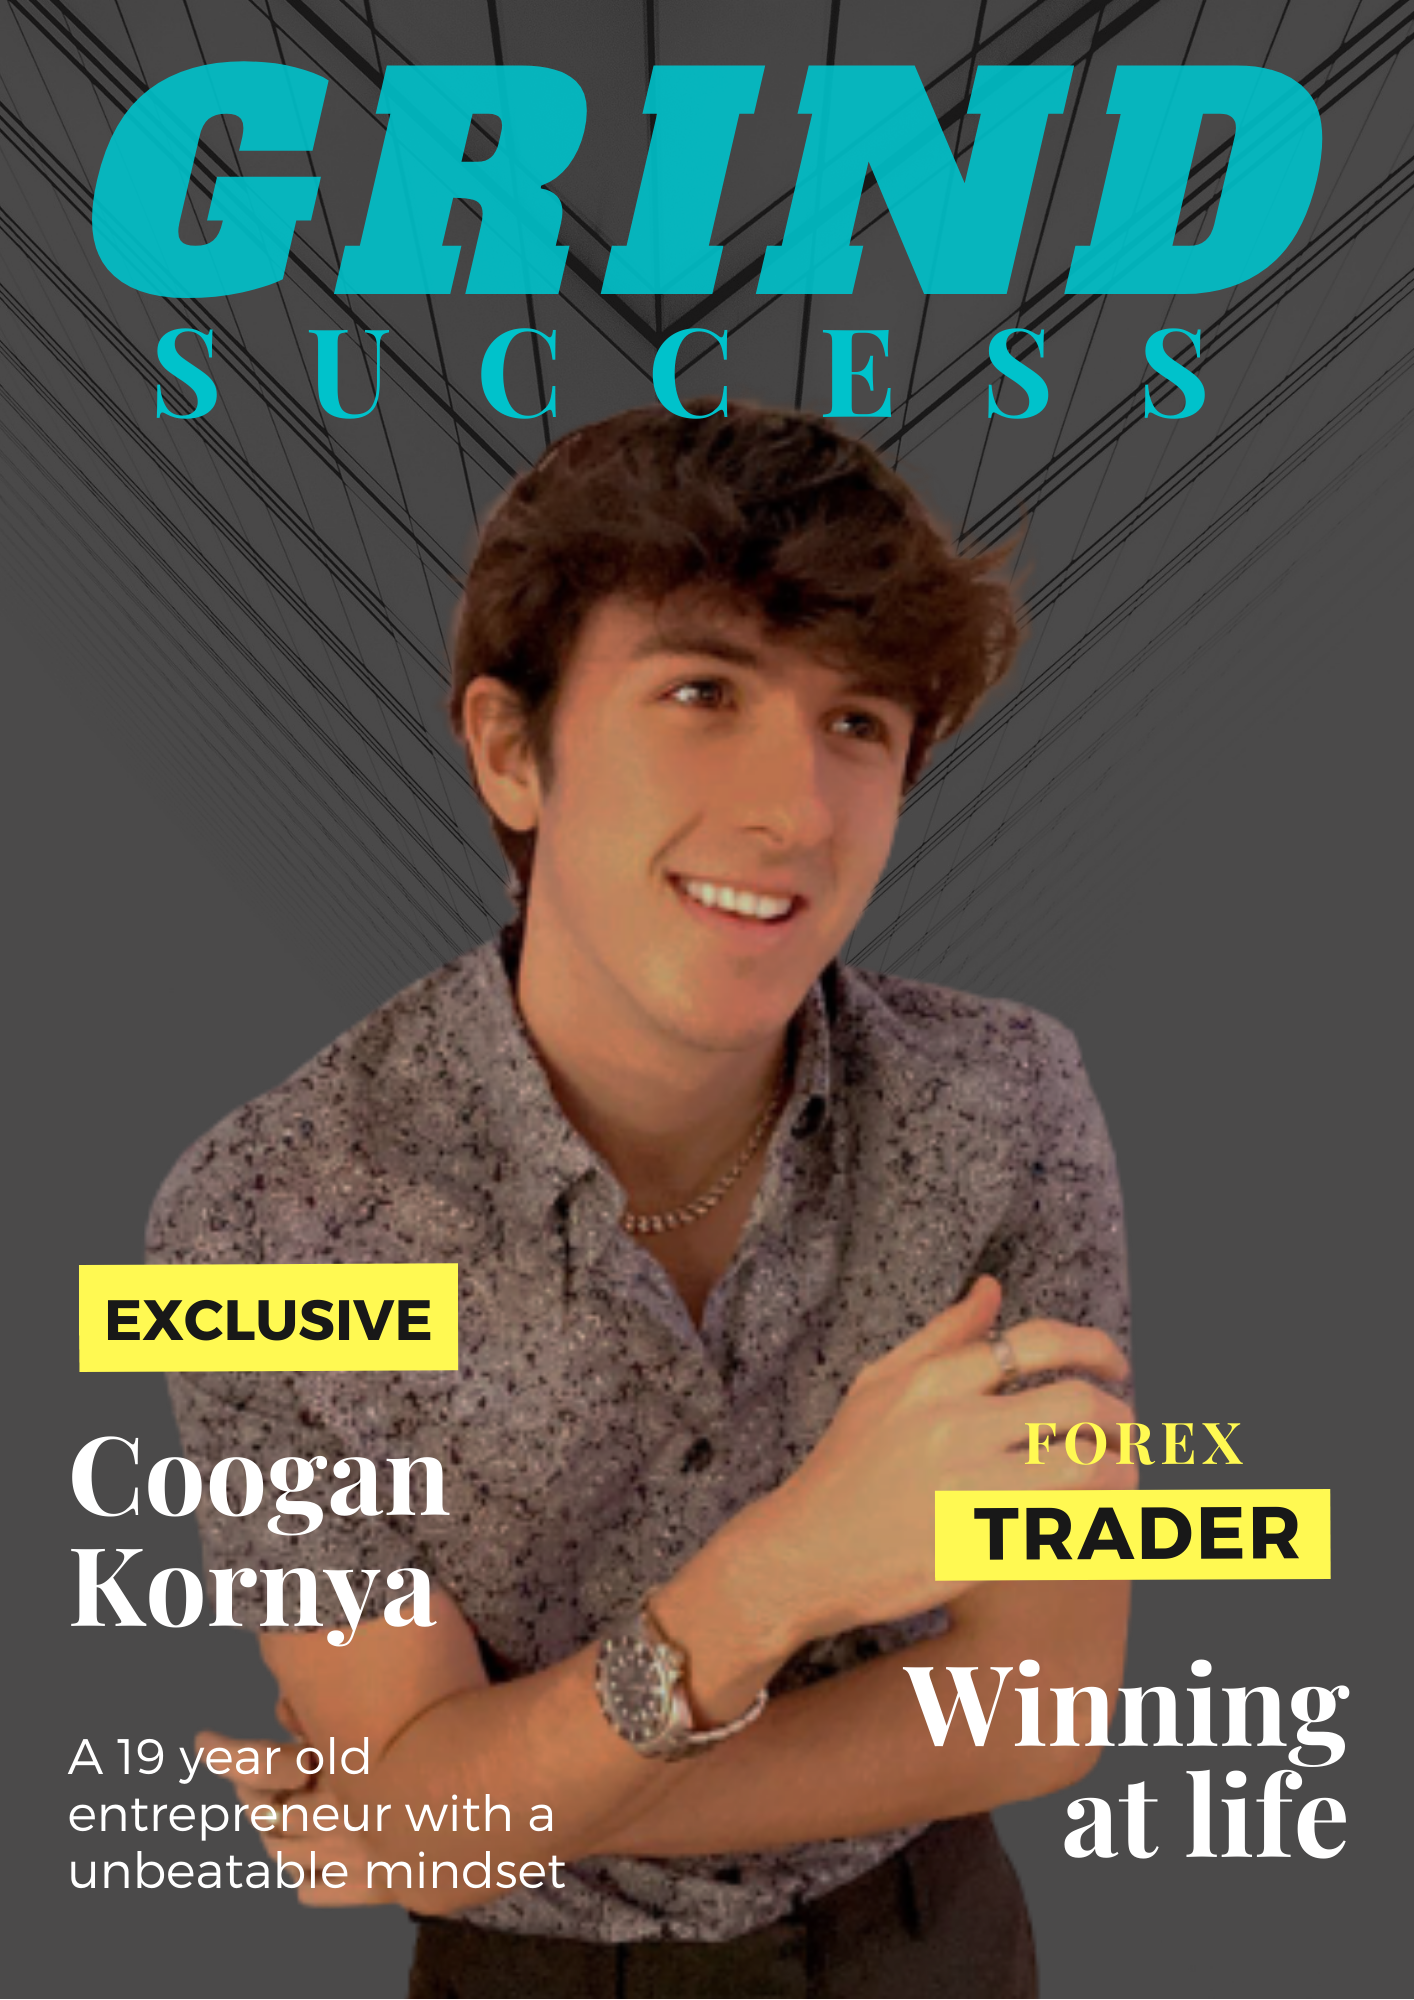 Meet Coogan Kornya, The Founder of Market Aspects, $37K/Month Trading Forex